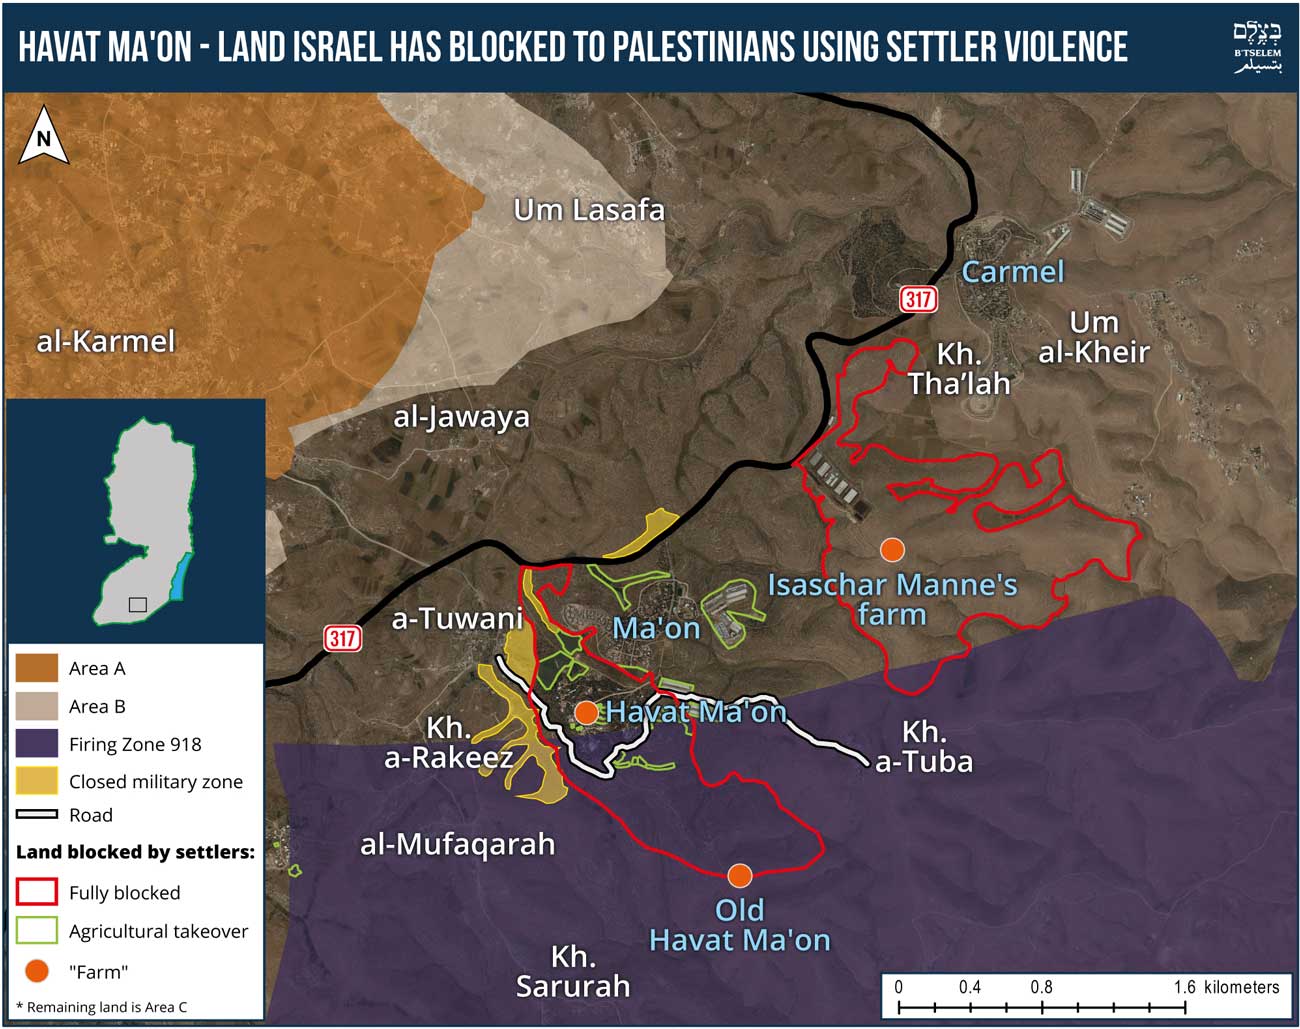 Havat Ma'on - land Israel has blocked to Palestinians using settler violence